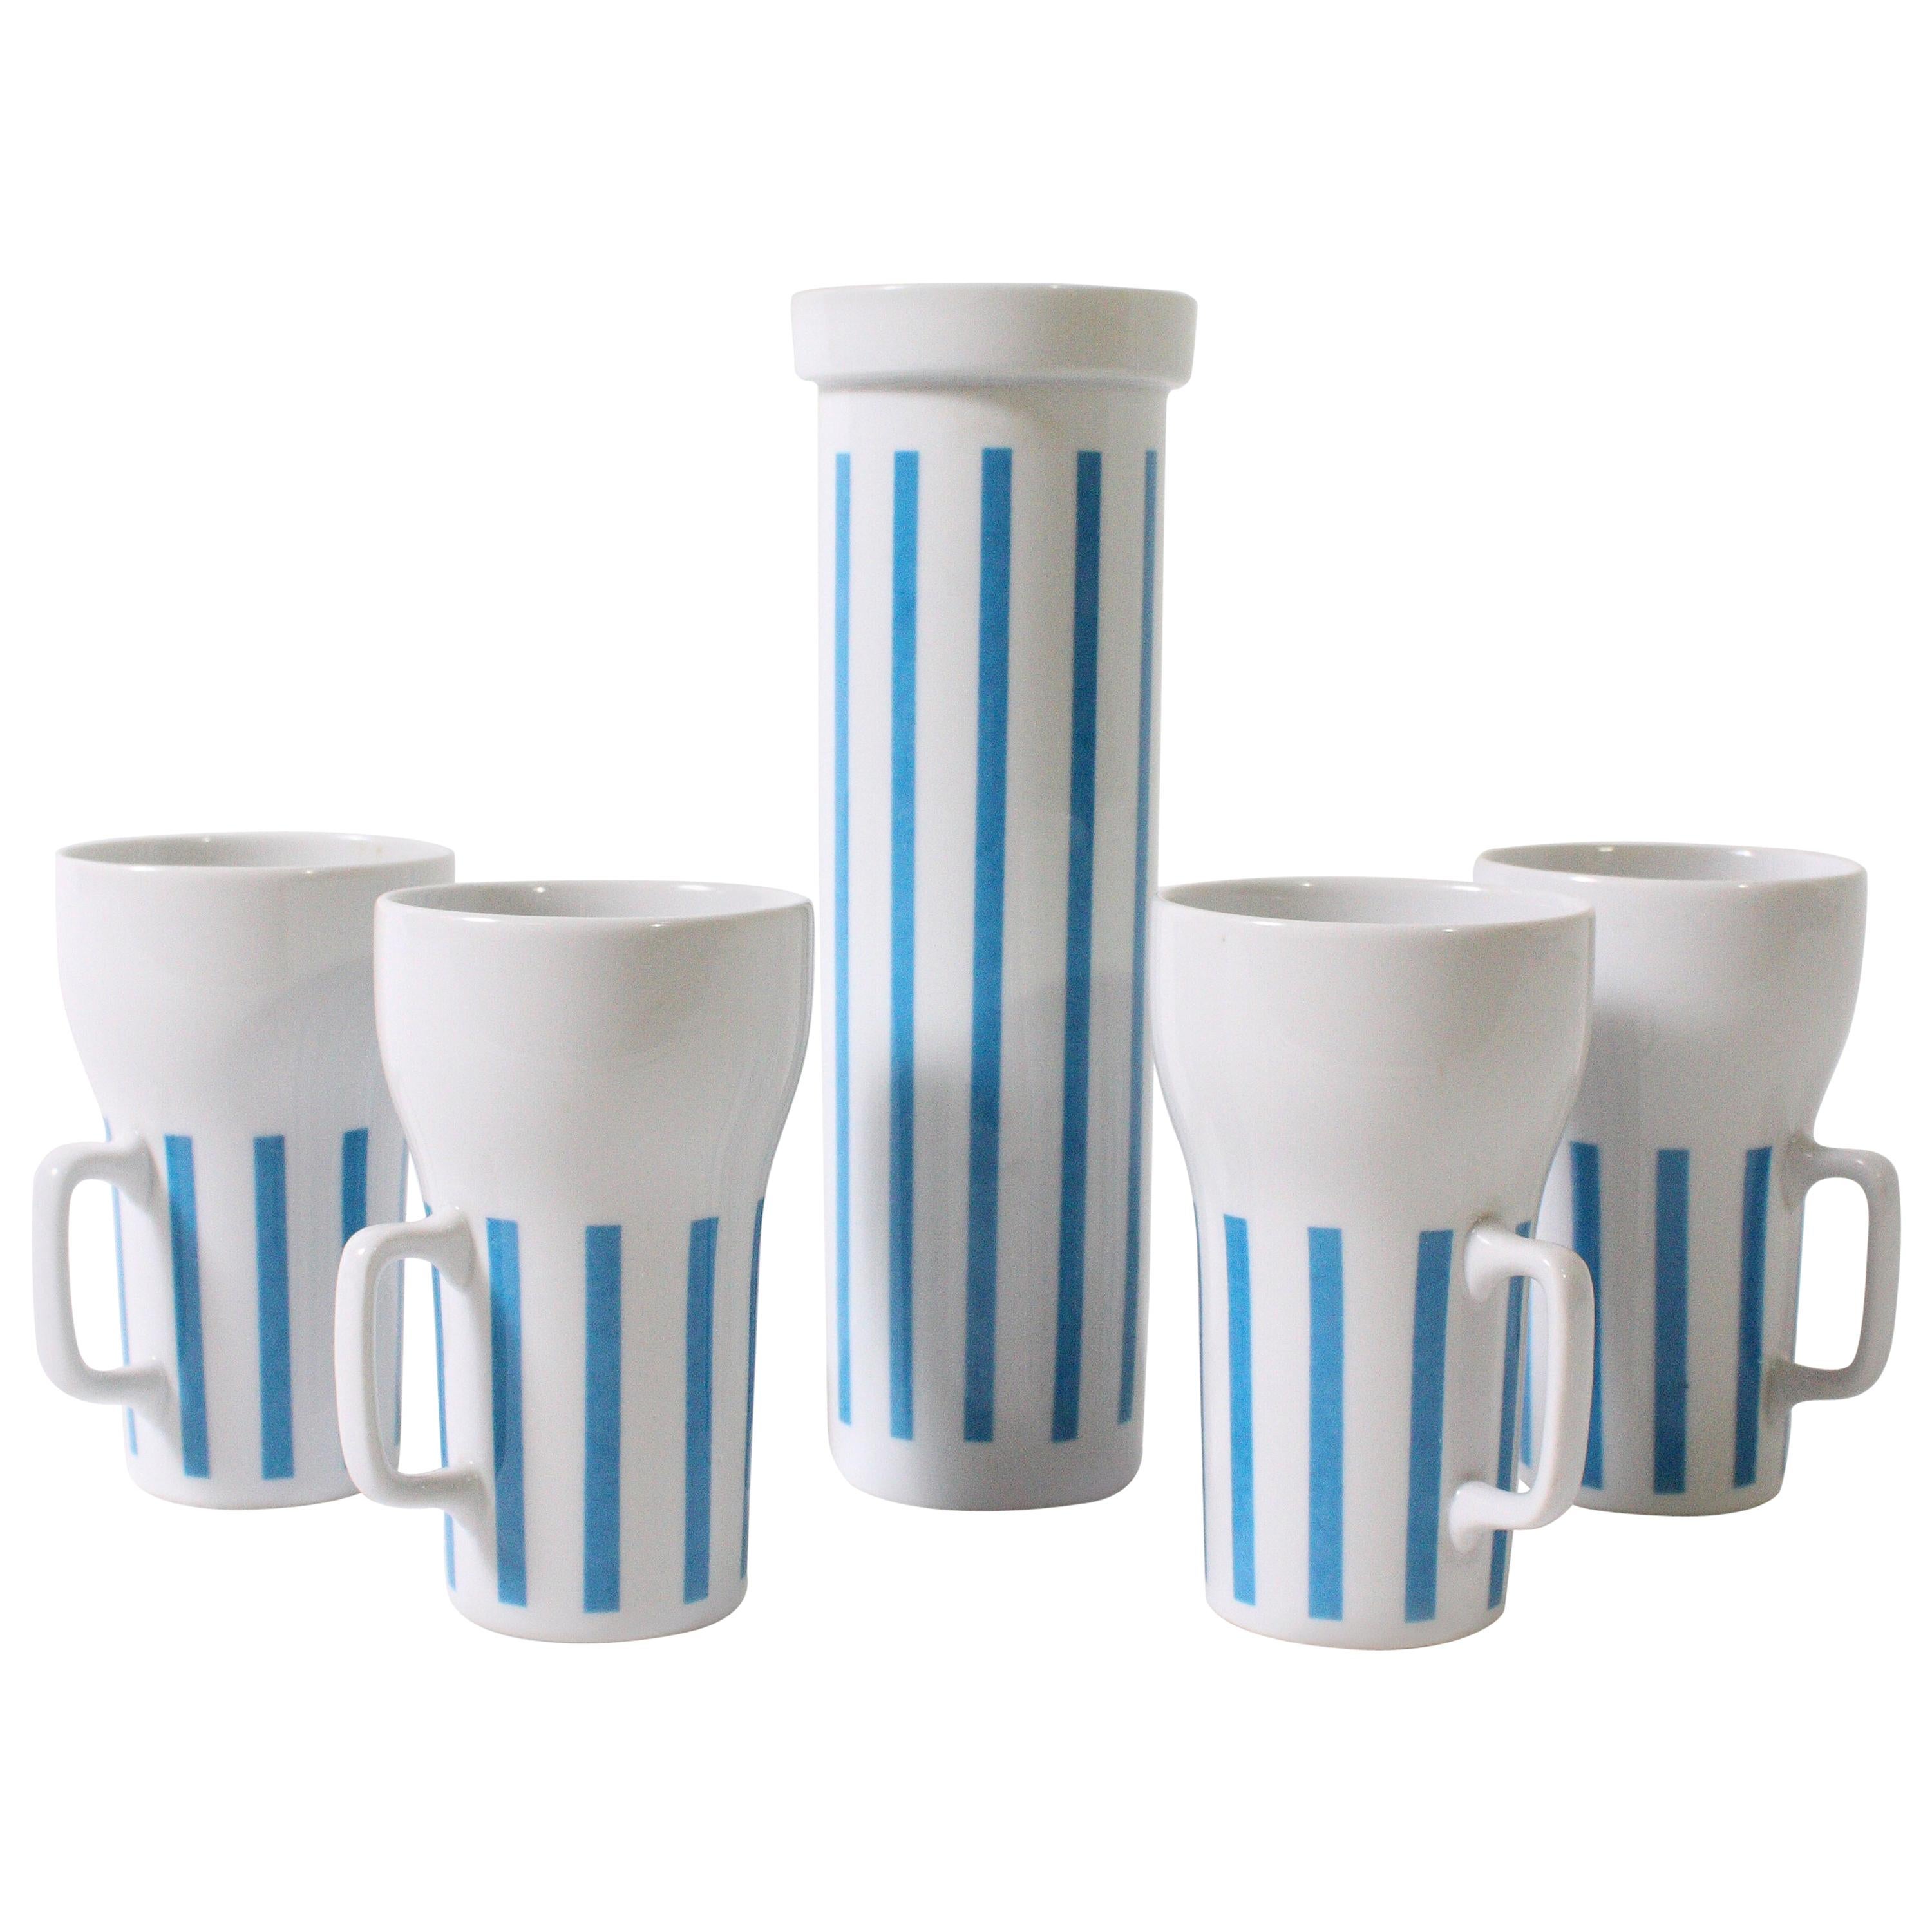 Ceramic Mugs and Tumbler by Lagardo Tackett